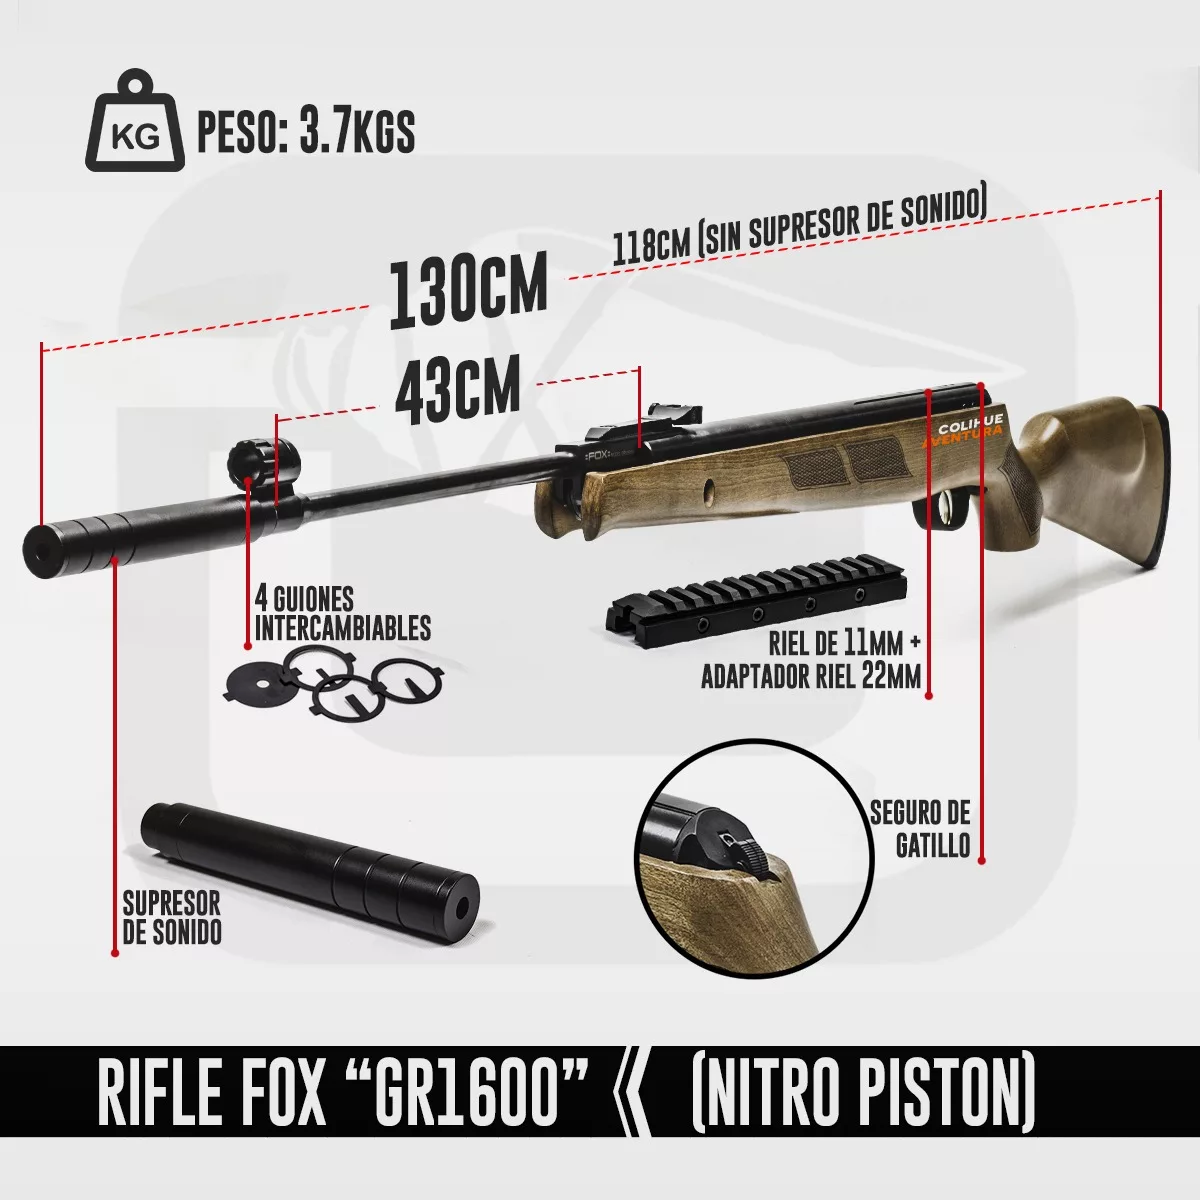 Rifle Nitro Piston Fox GR 1600 W cal 5,5mm - Colihue Aventura